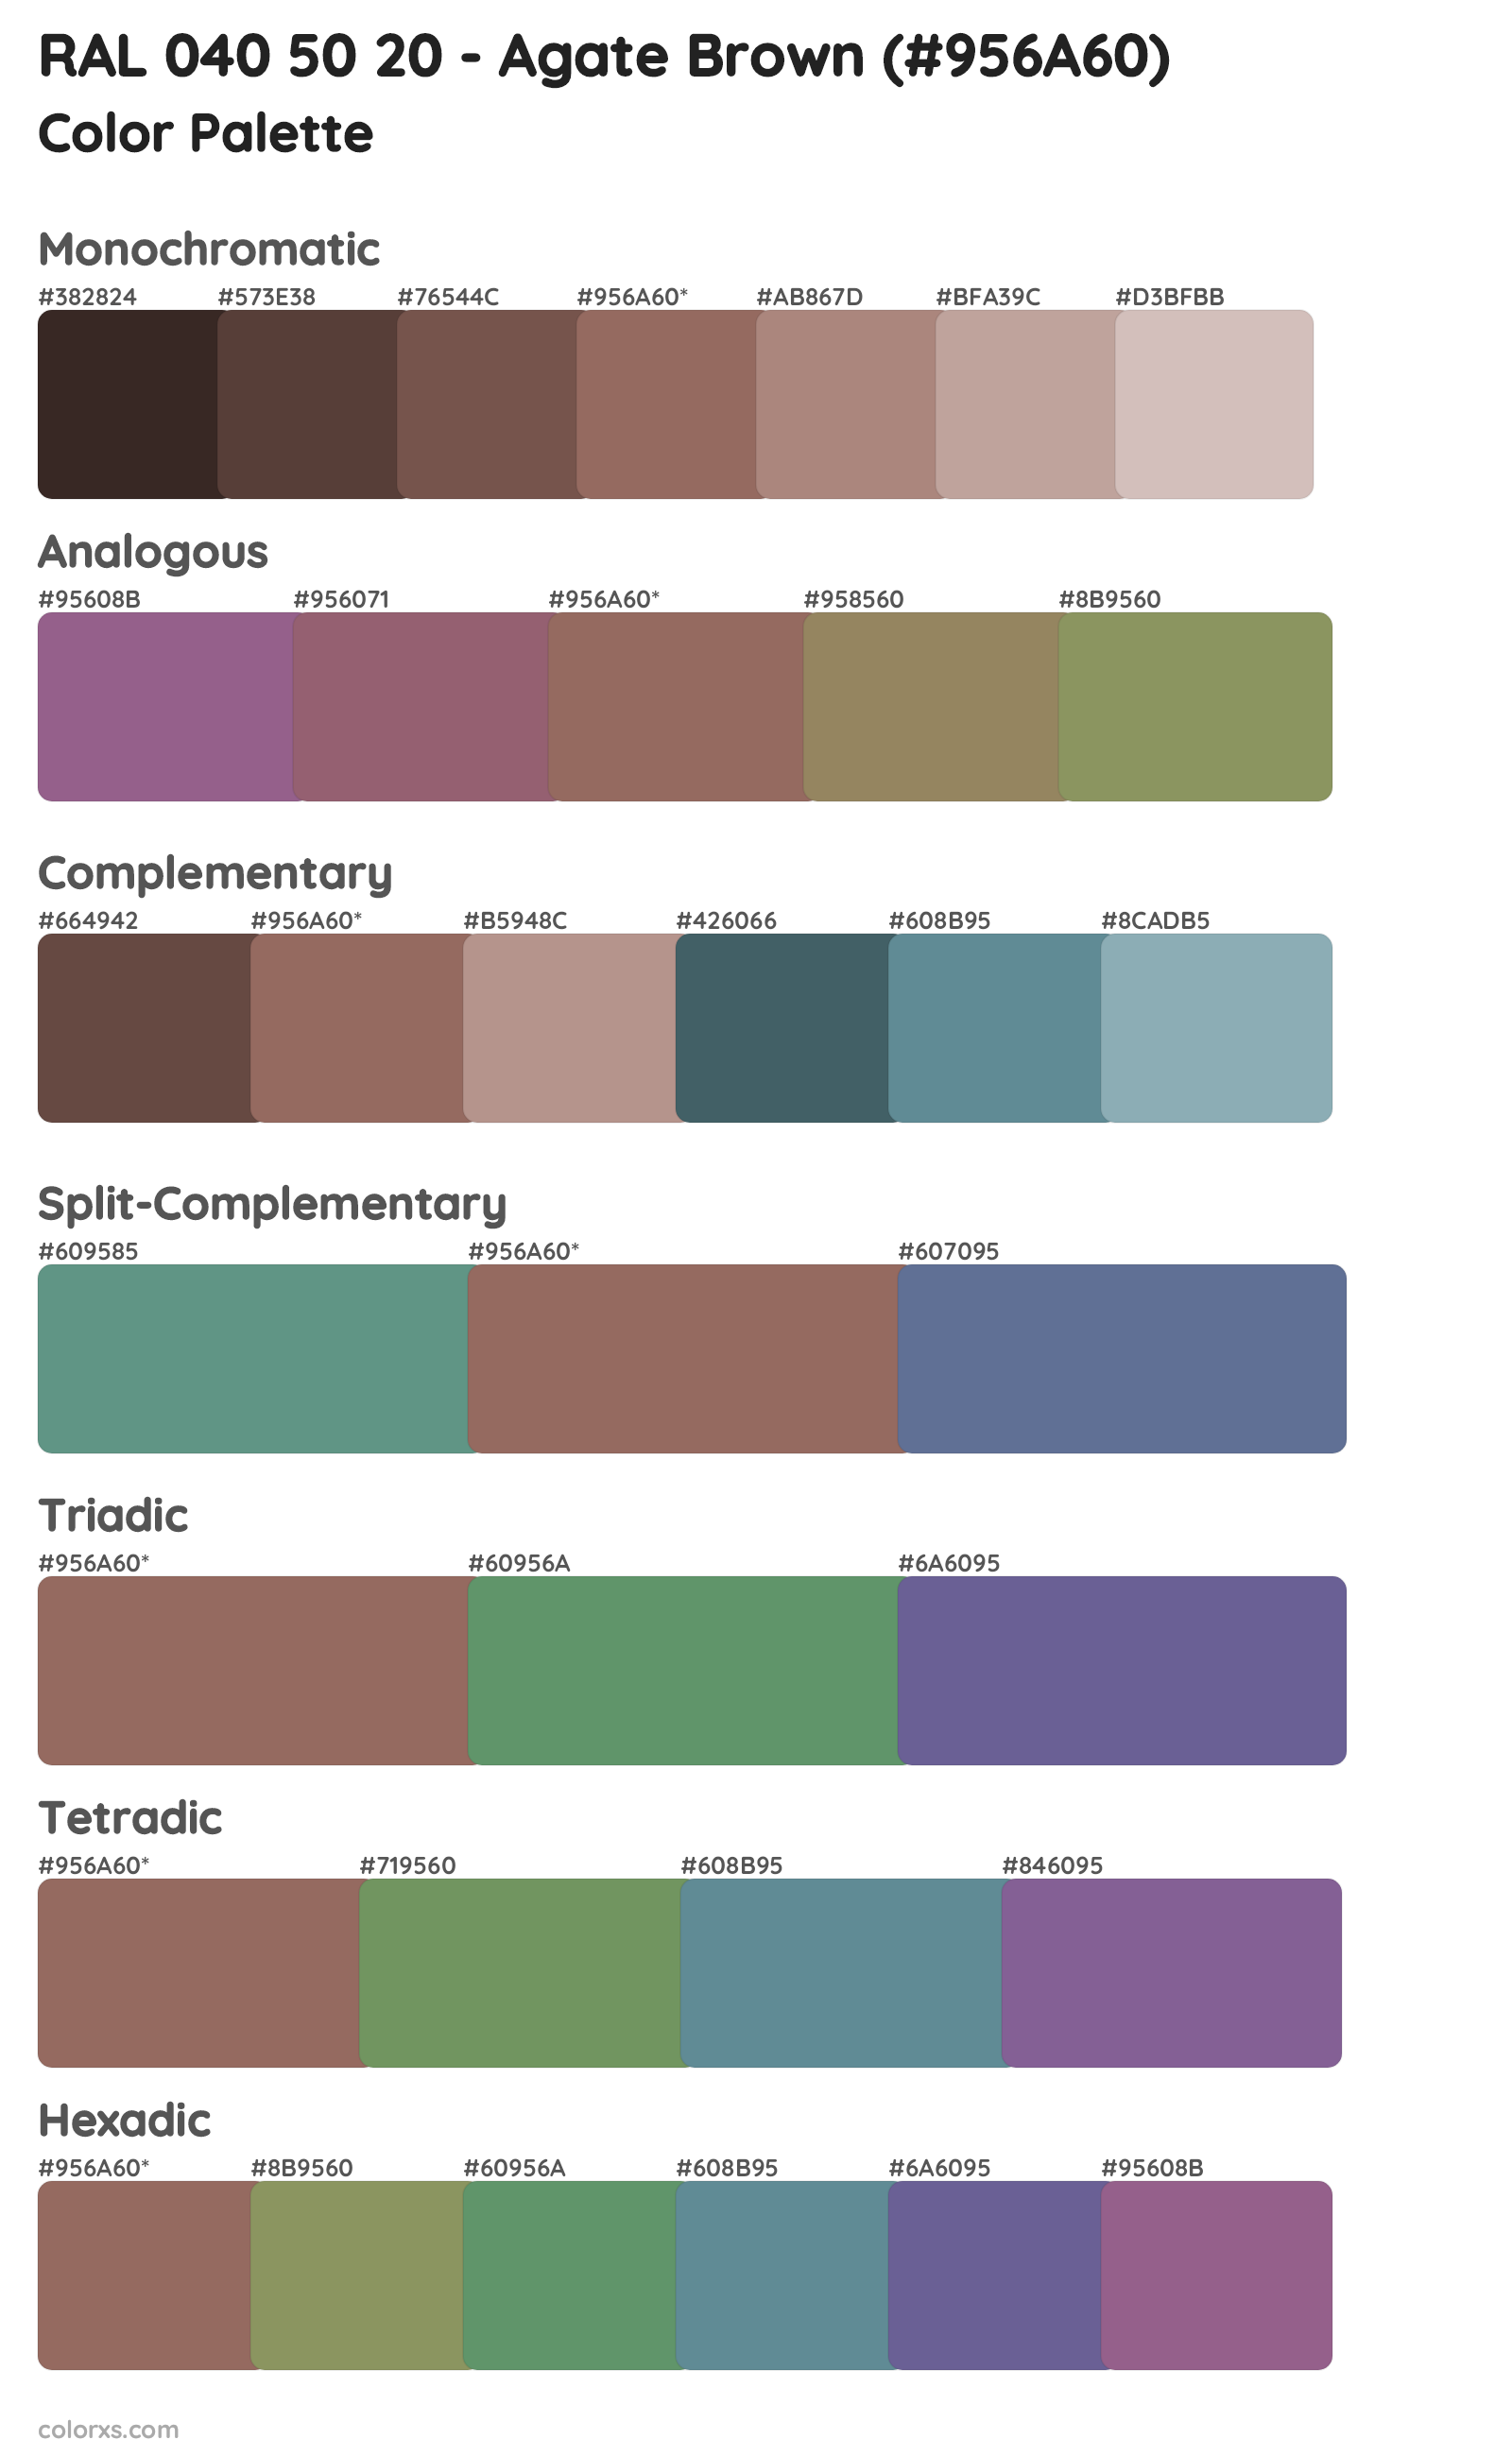 RAL 040 50 20 - Agate Brown Color Scheme Palettes